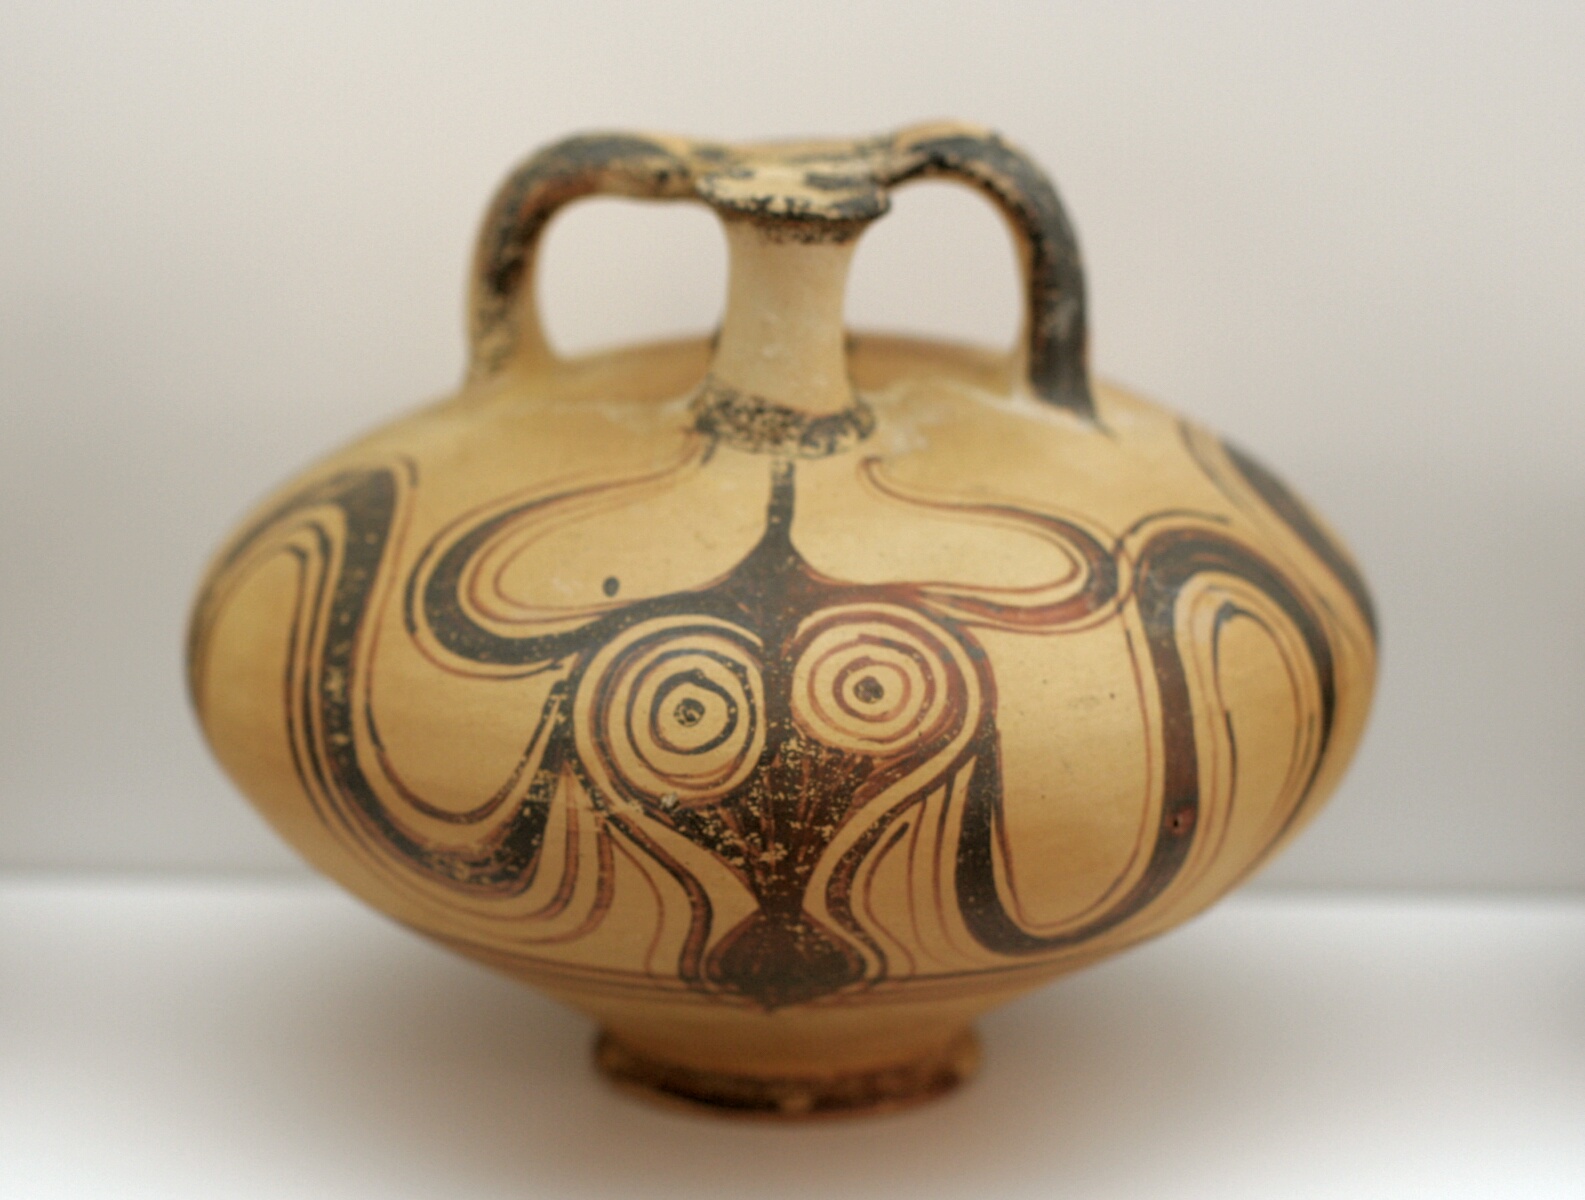 Octopus Vase (Marine Style), c. 1500 B. C.